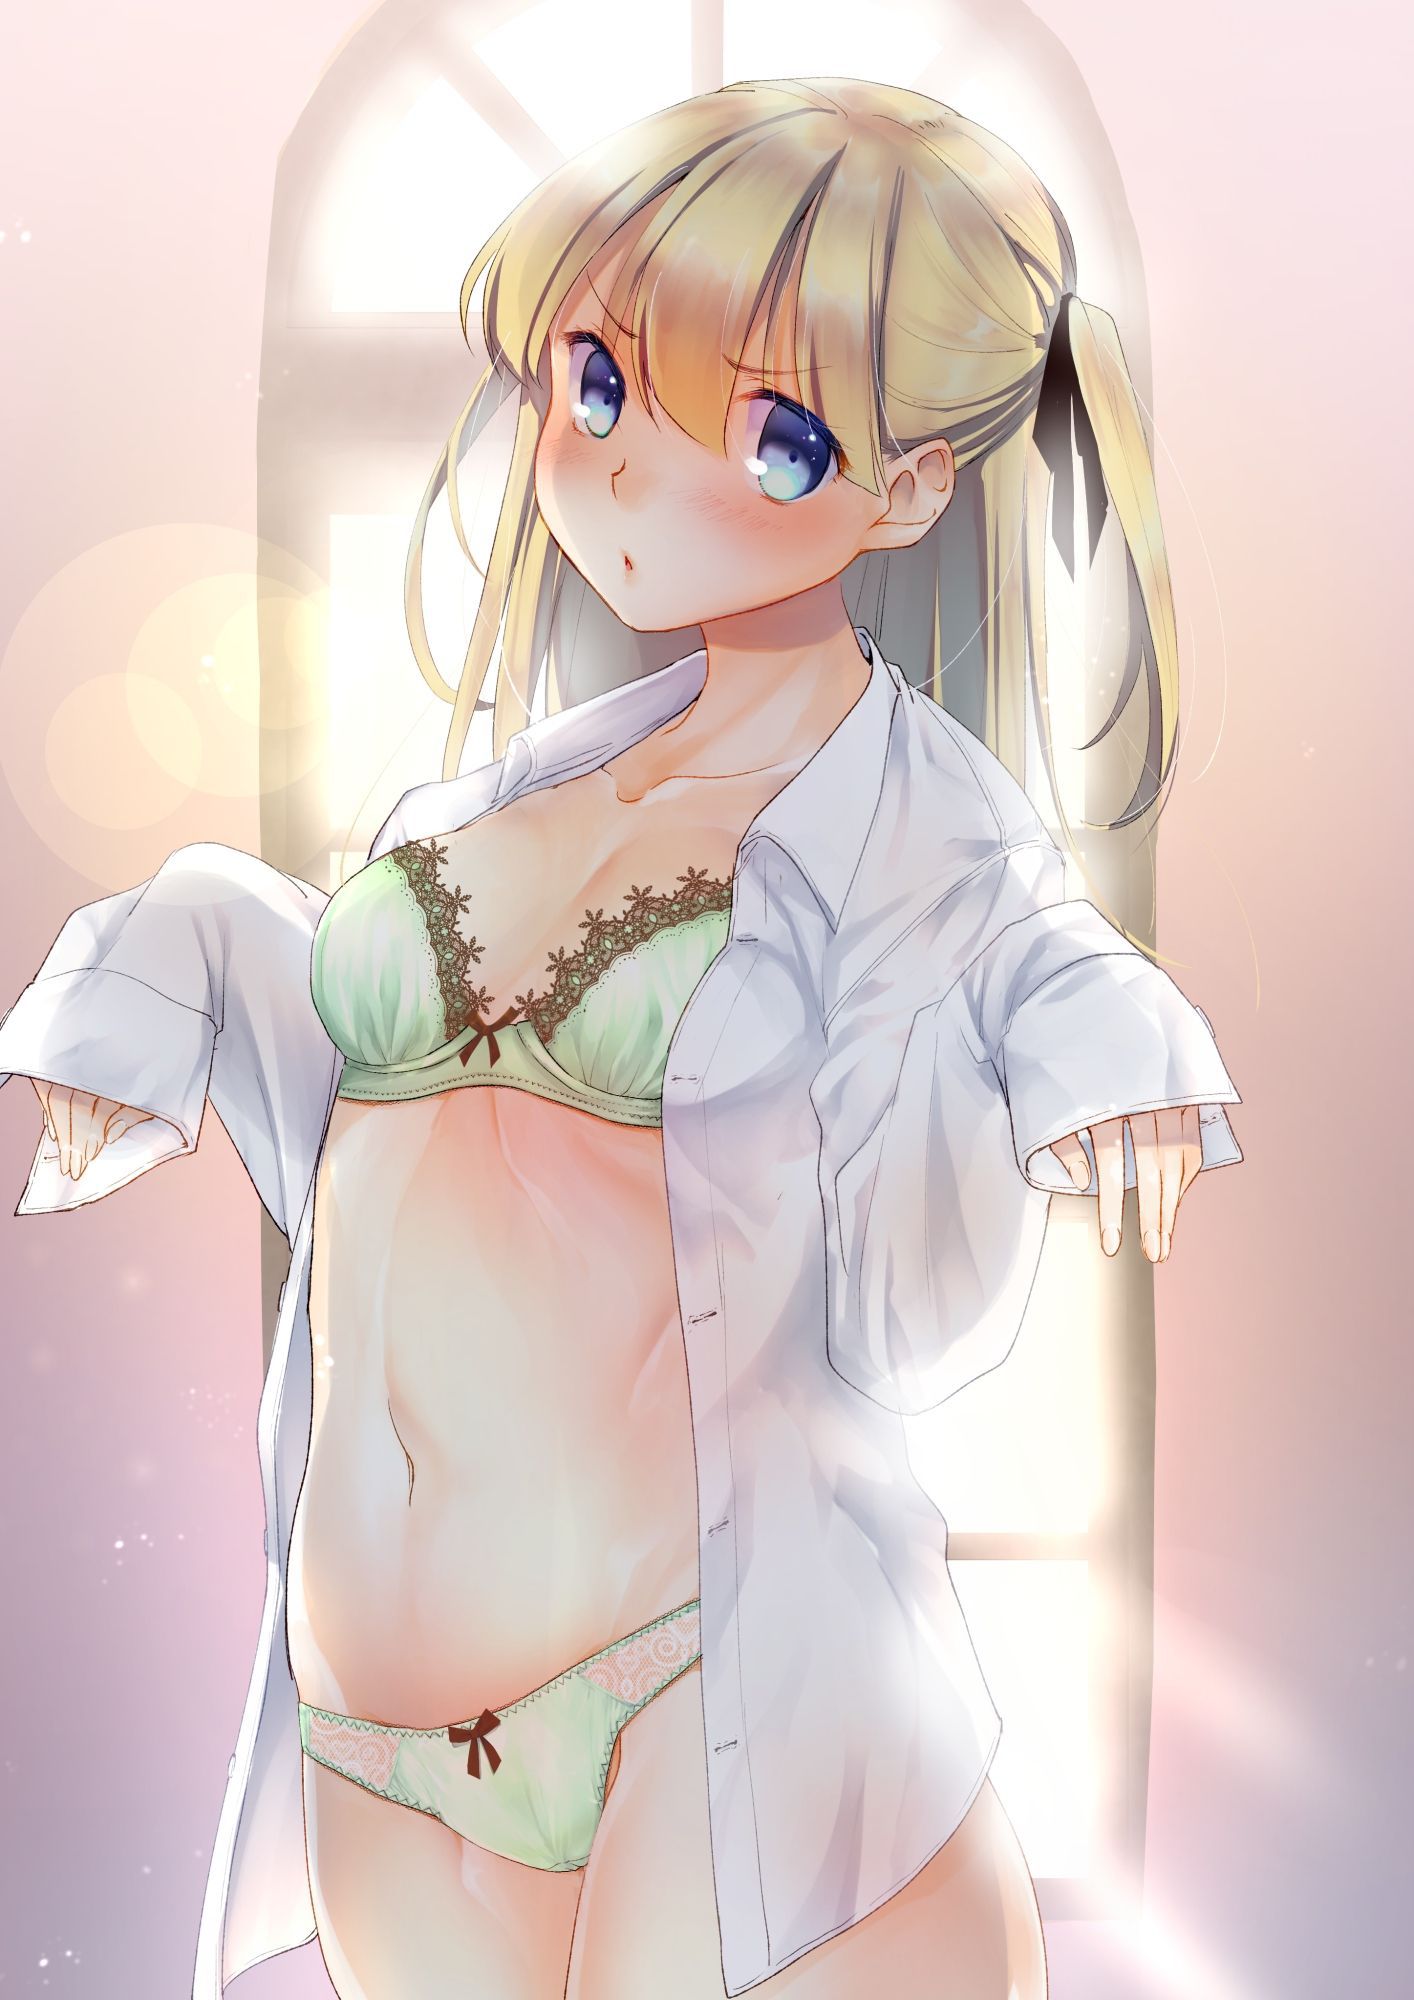 Erotic anime summary underwear is green beautiful girls [secondary erotic] 30